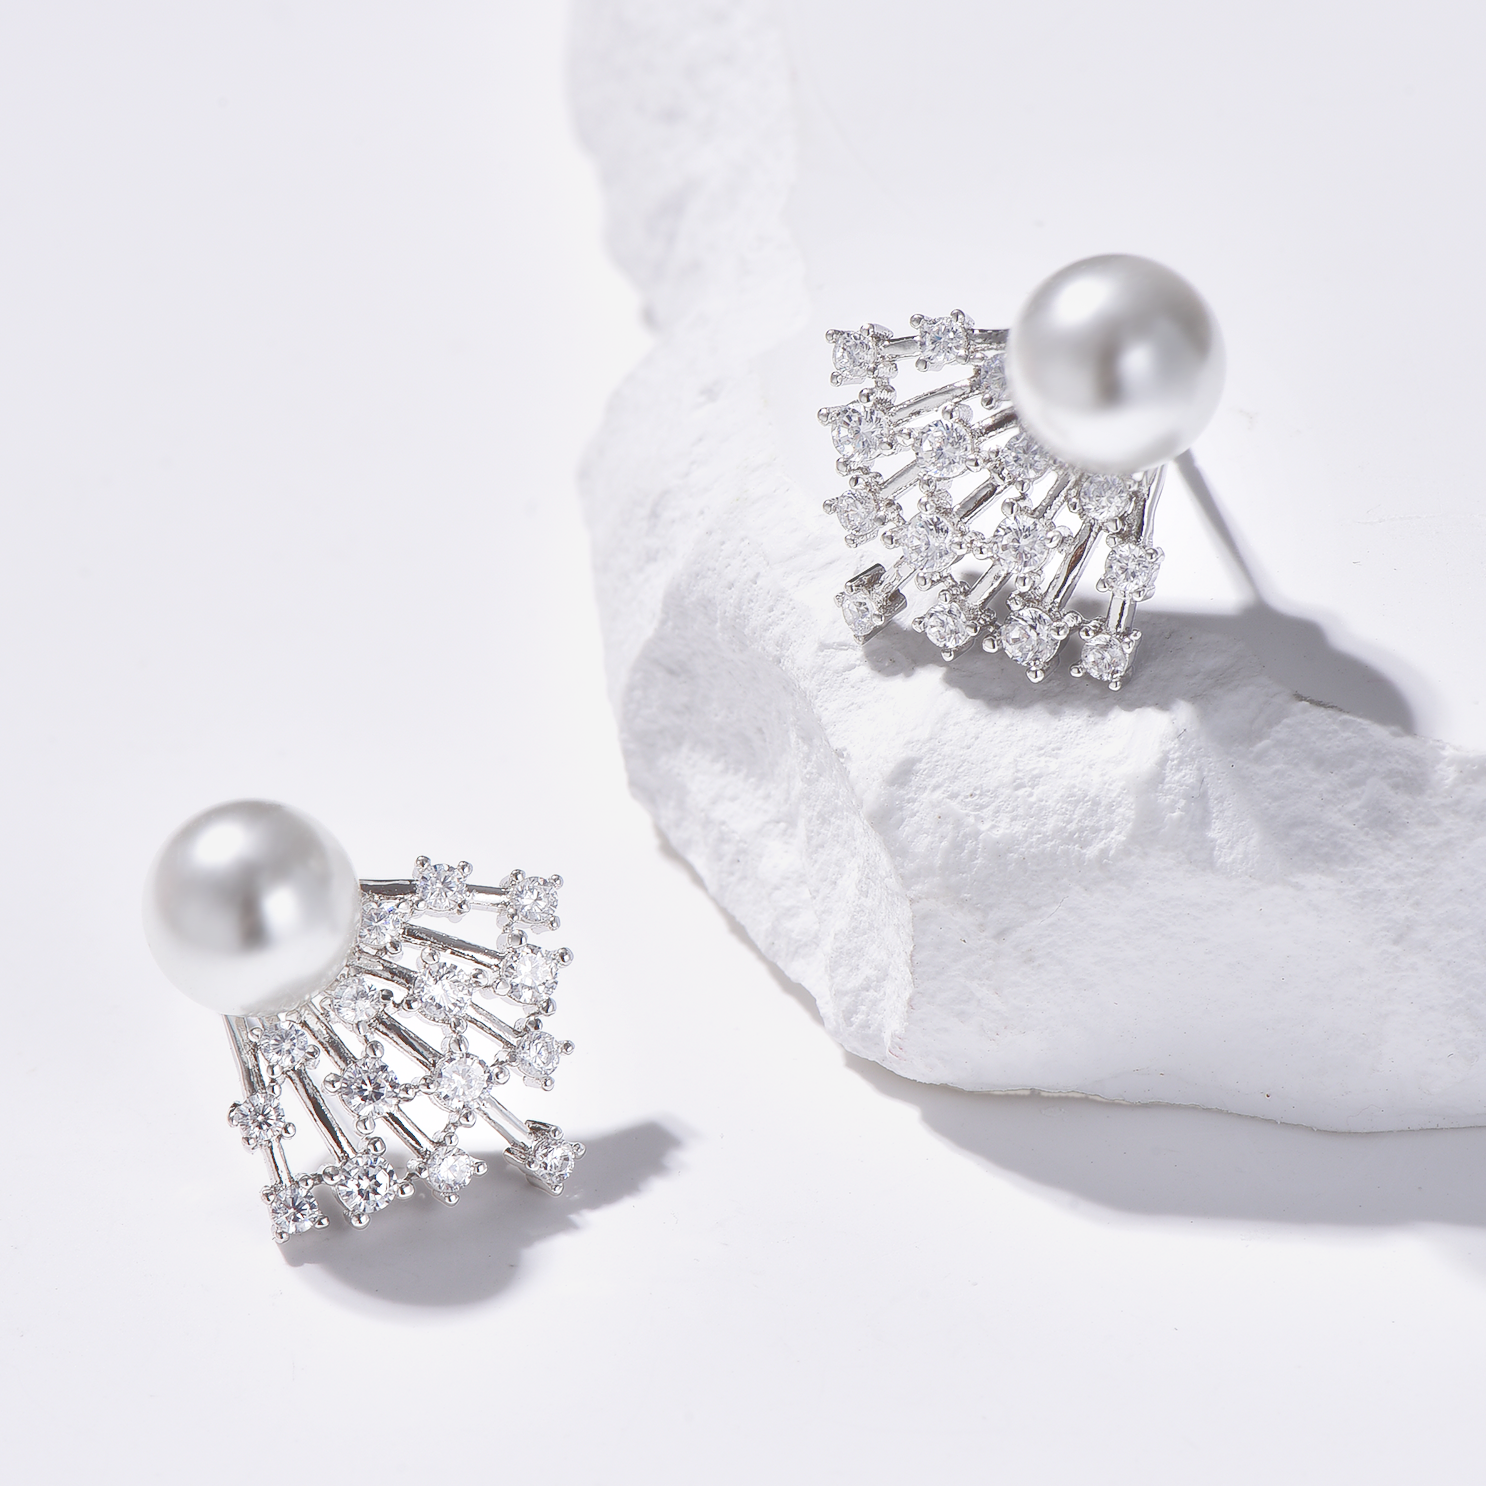 Pearl Scallop Stud Earrings Inlaid with CZ - Silver - Earrings - ONNNIII